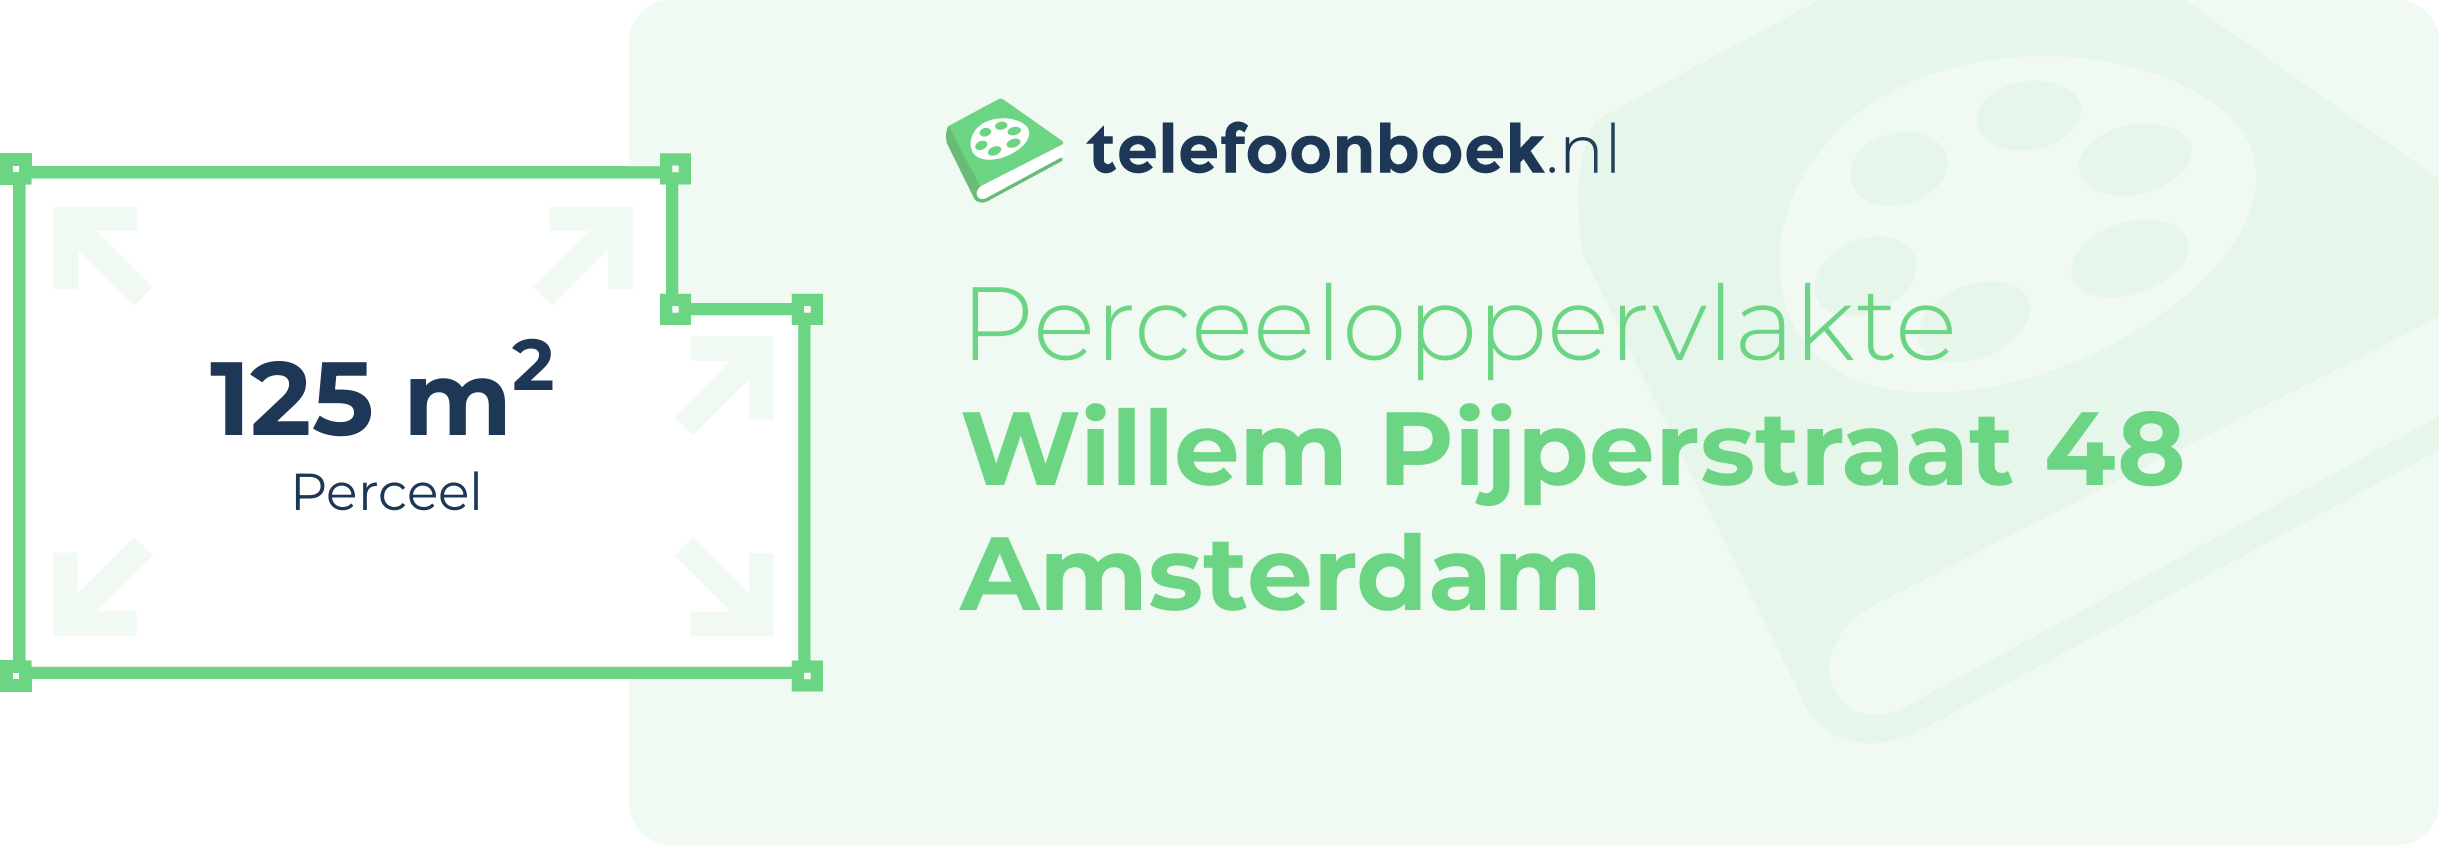 Perceeloppervlakte Willem Pijperstraat 48 Amsterdam